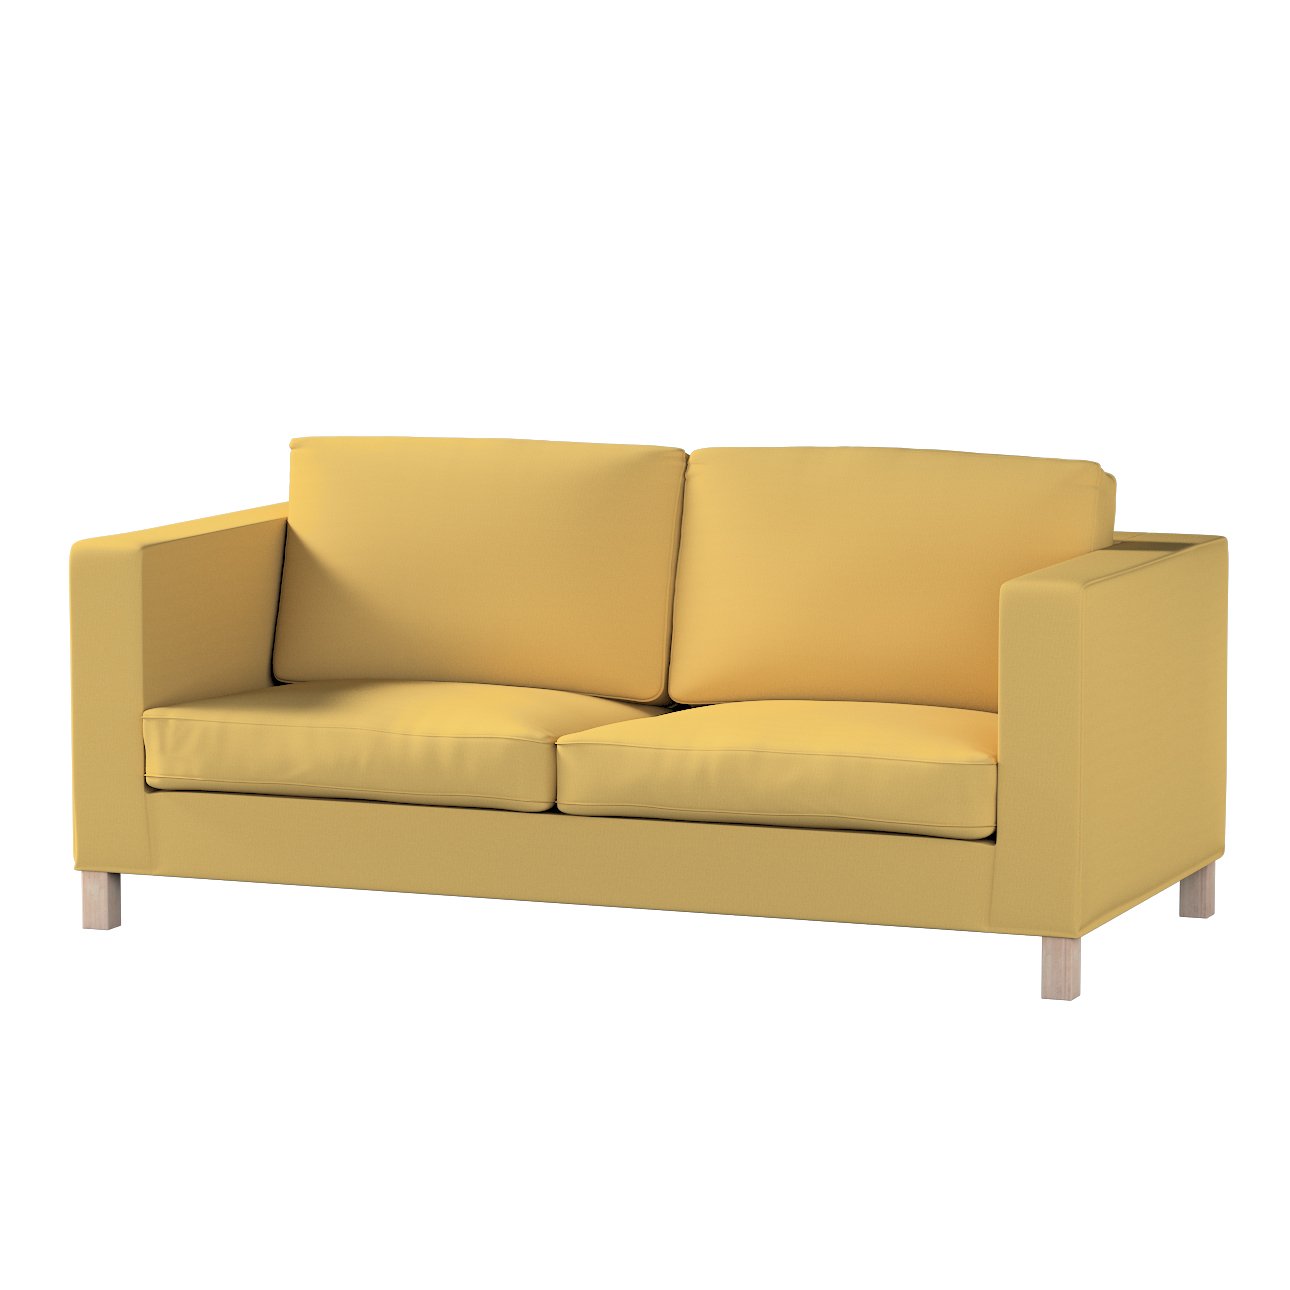 Dekoria Poťah na sedačku Karlanda (rozkladacia,krátky), matná žltá, Poťah na sedačku Karlanda rozkladacia, Cotton Panama, 702-41